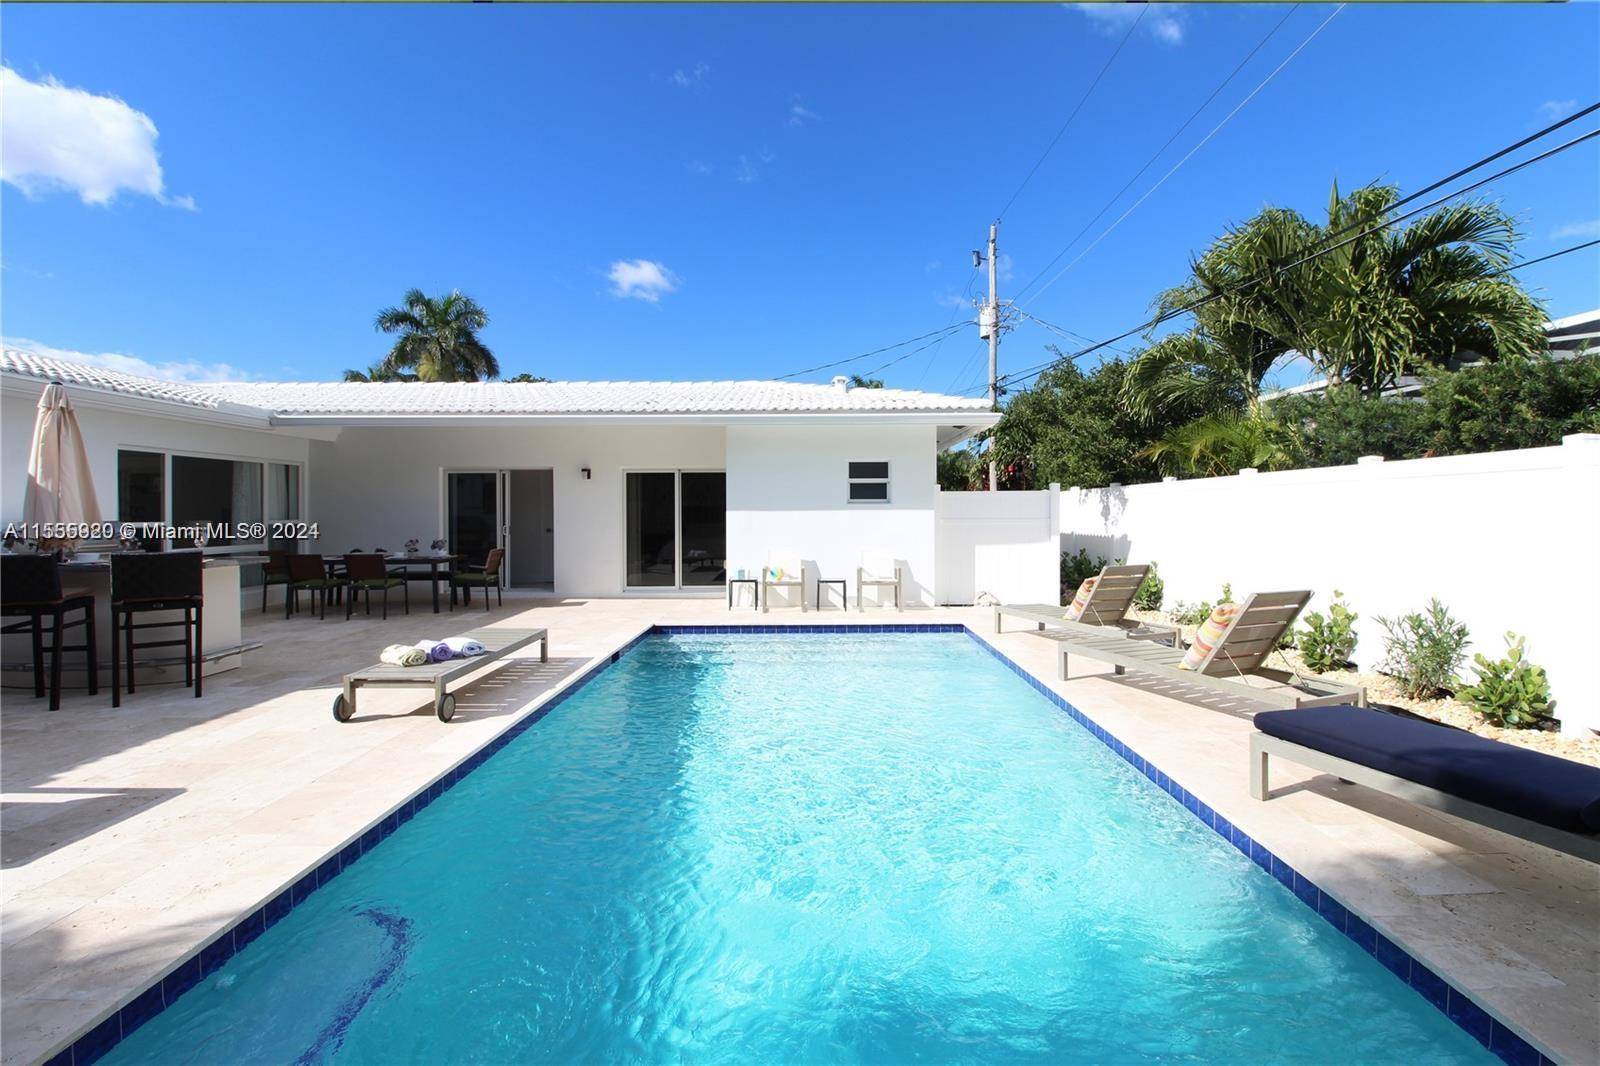 Beautiful seasonal rental in the heart of Lauderdale By The Sea.